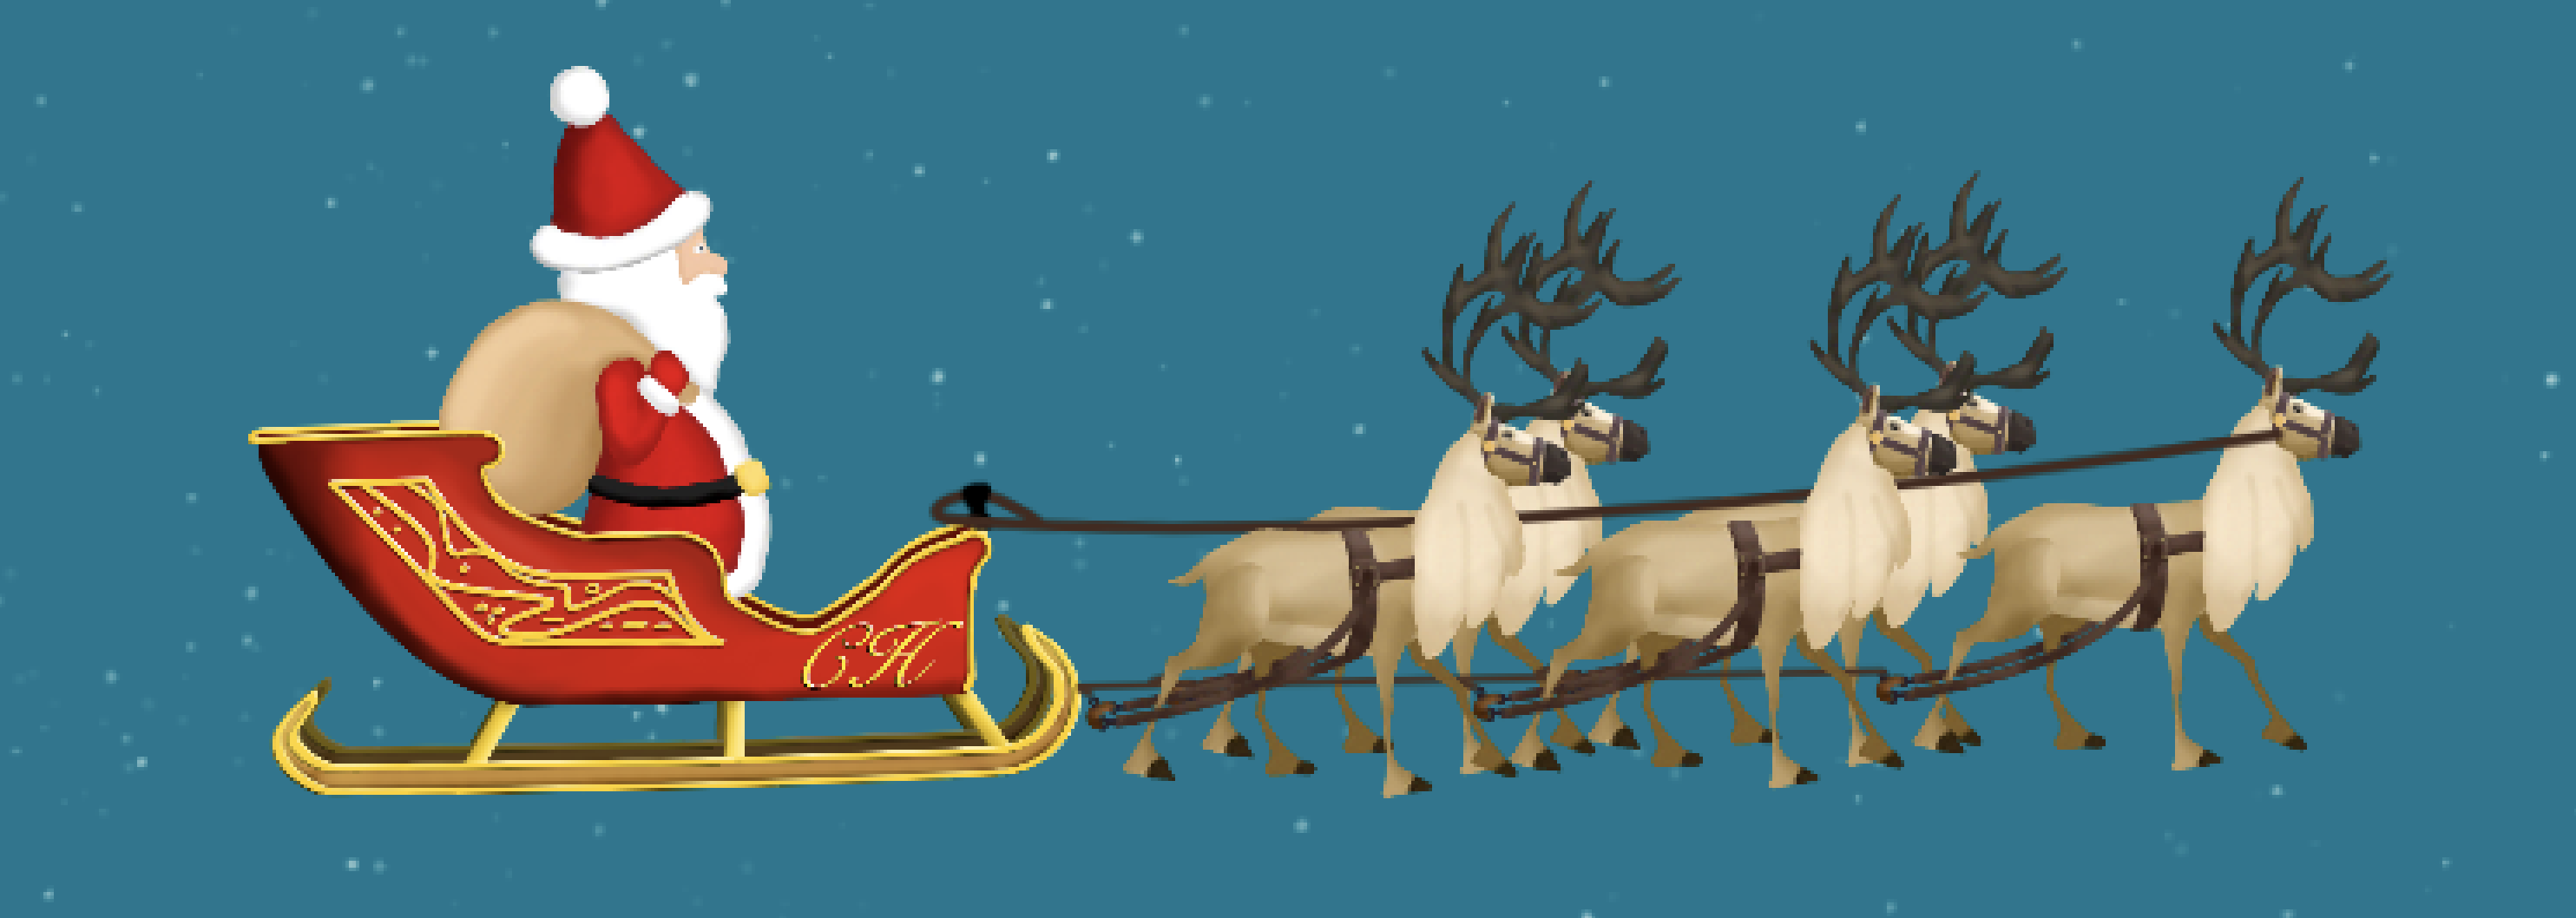 Chimney Hop - Santa Present Delivery